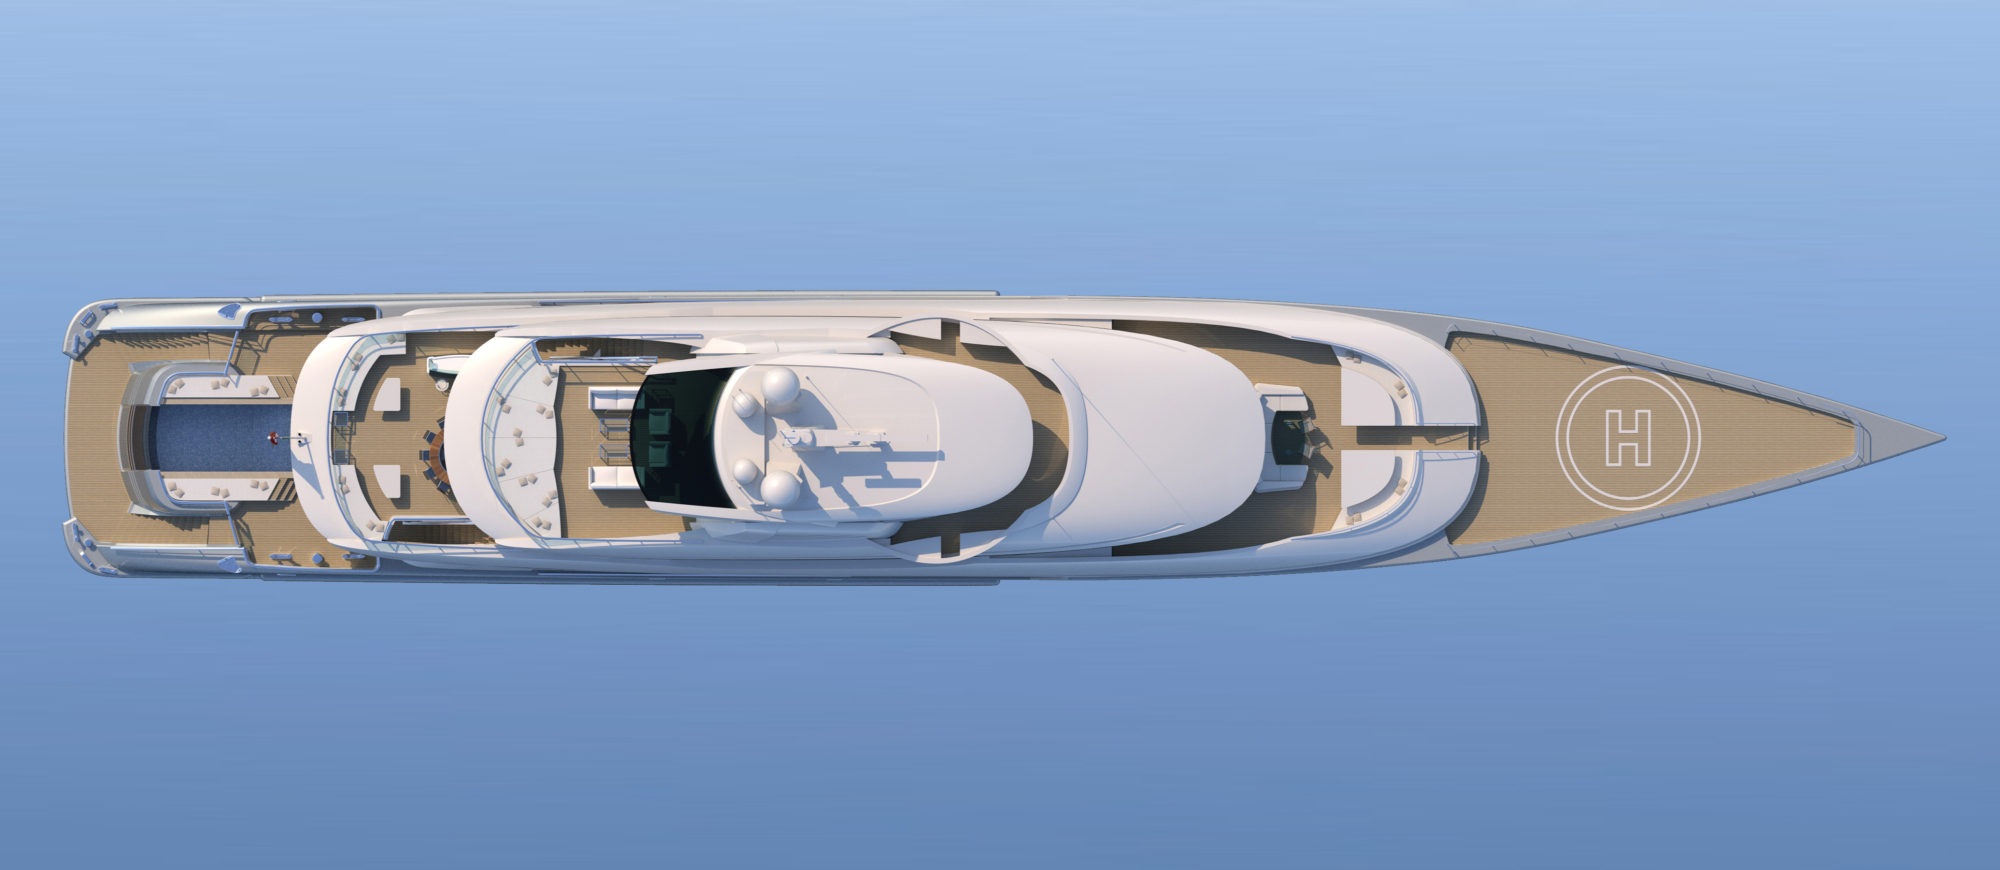 Conrad C233 Superyacht Concept Vallicelli Visualisation Top Profile